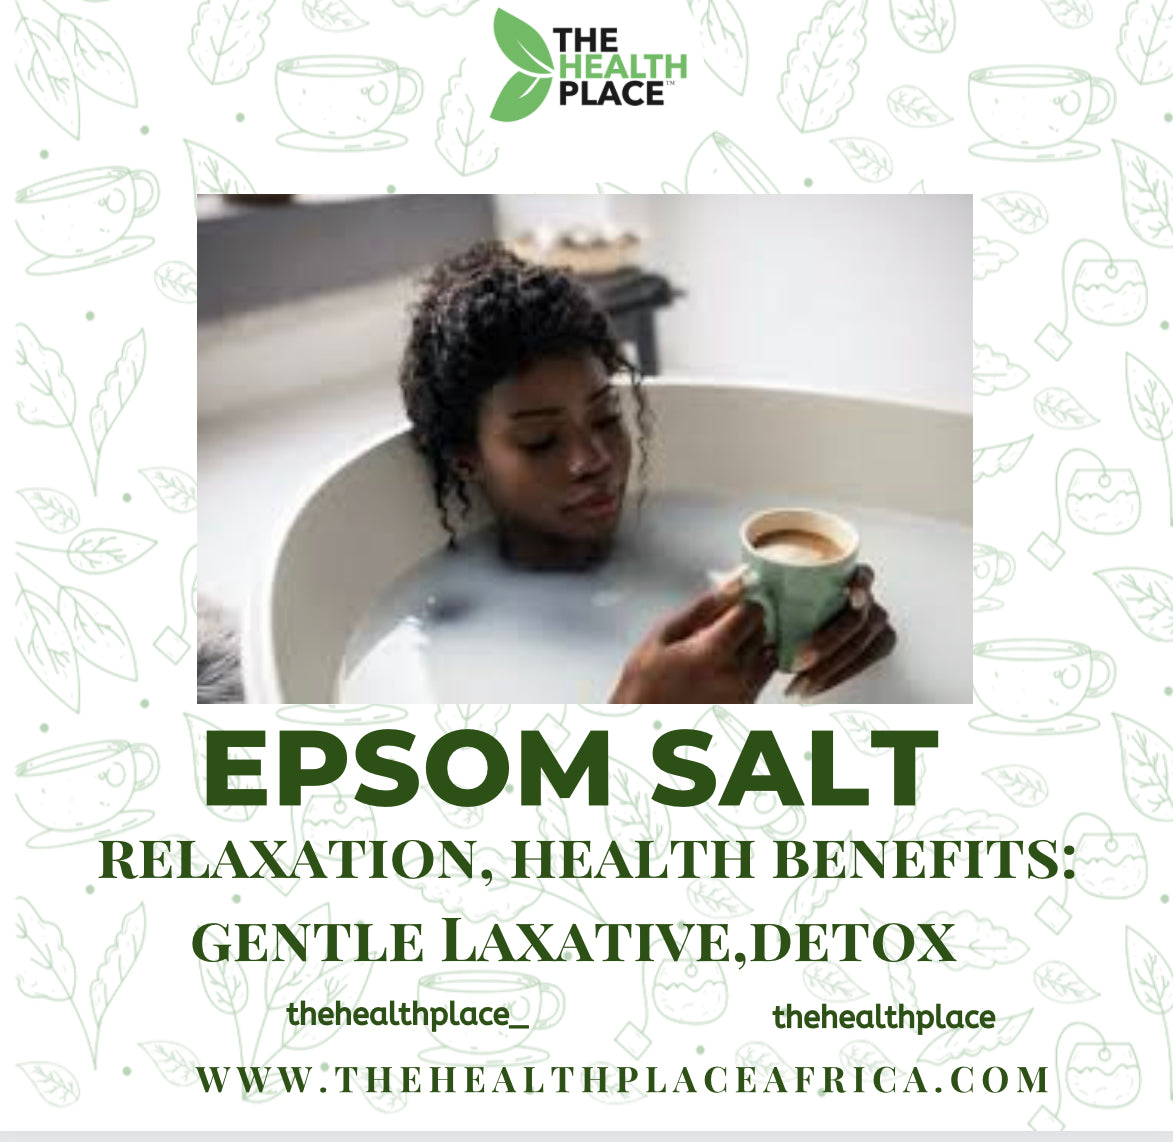 EPSOM SALT FOR RELAXATION, DETOXOFICATION AND LAXATIVE.